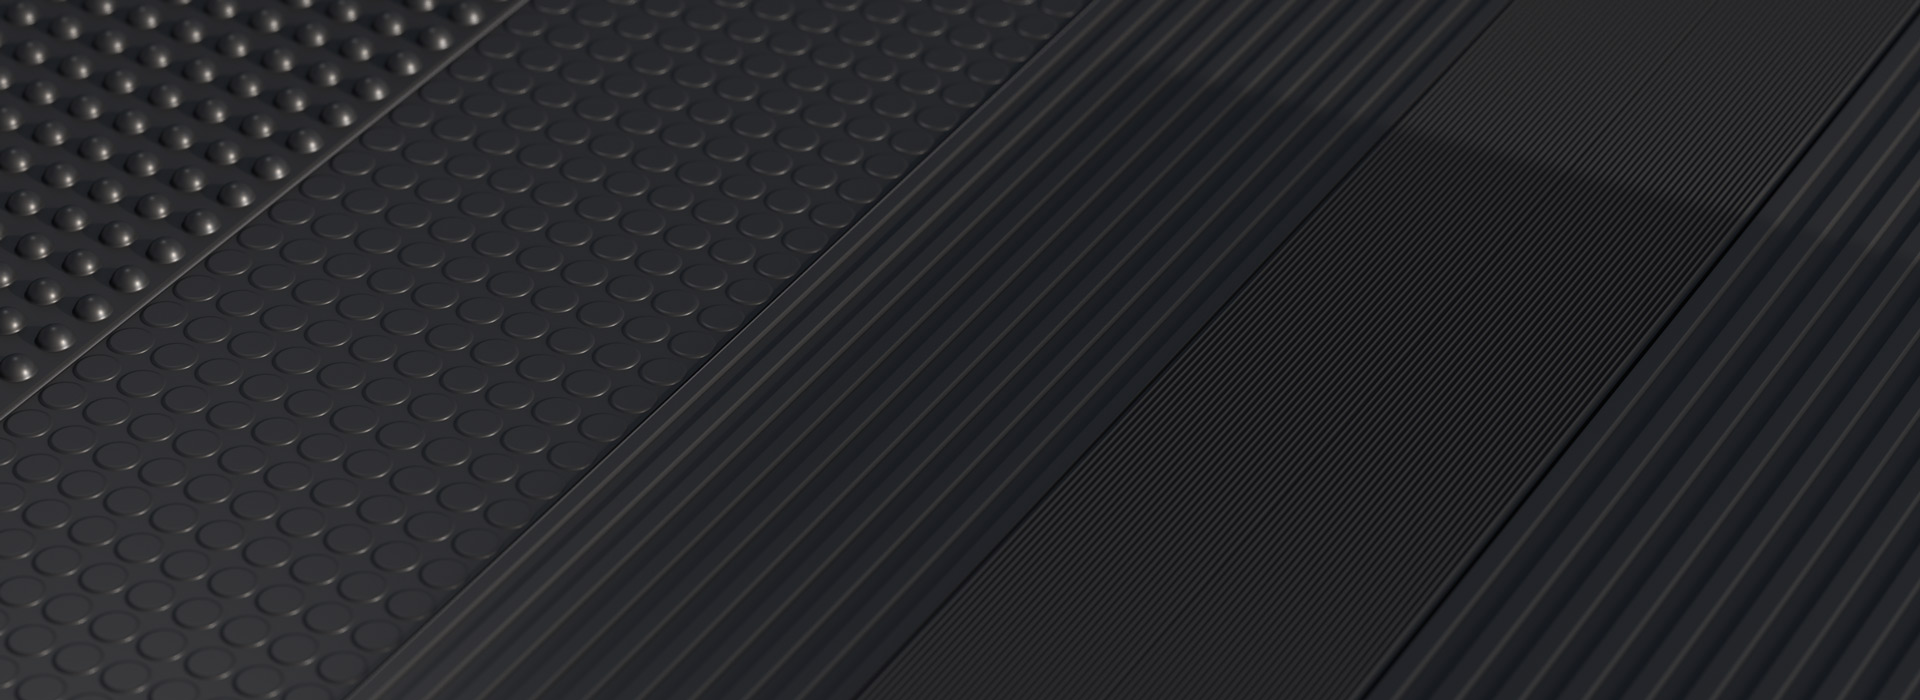 close up of black rubber matting